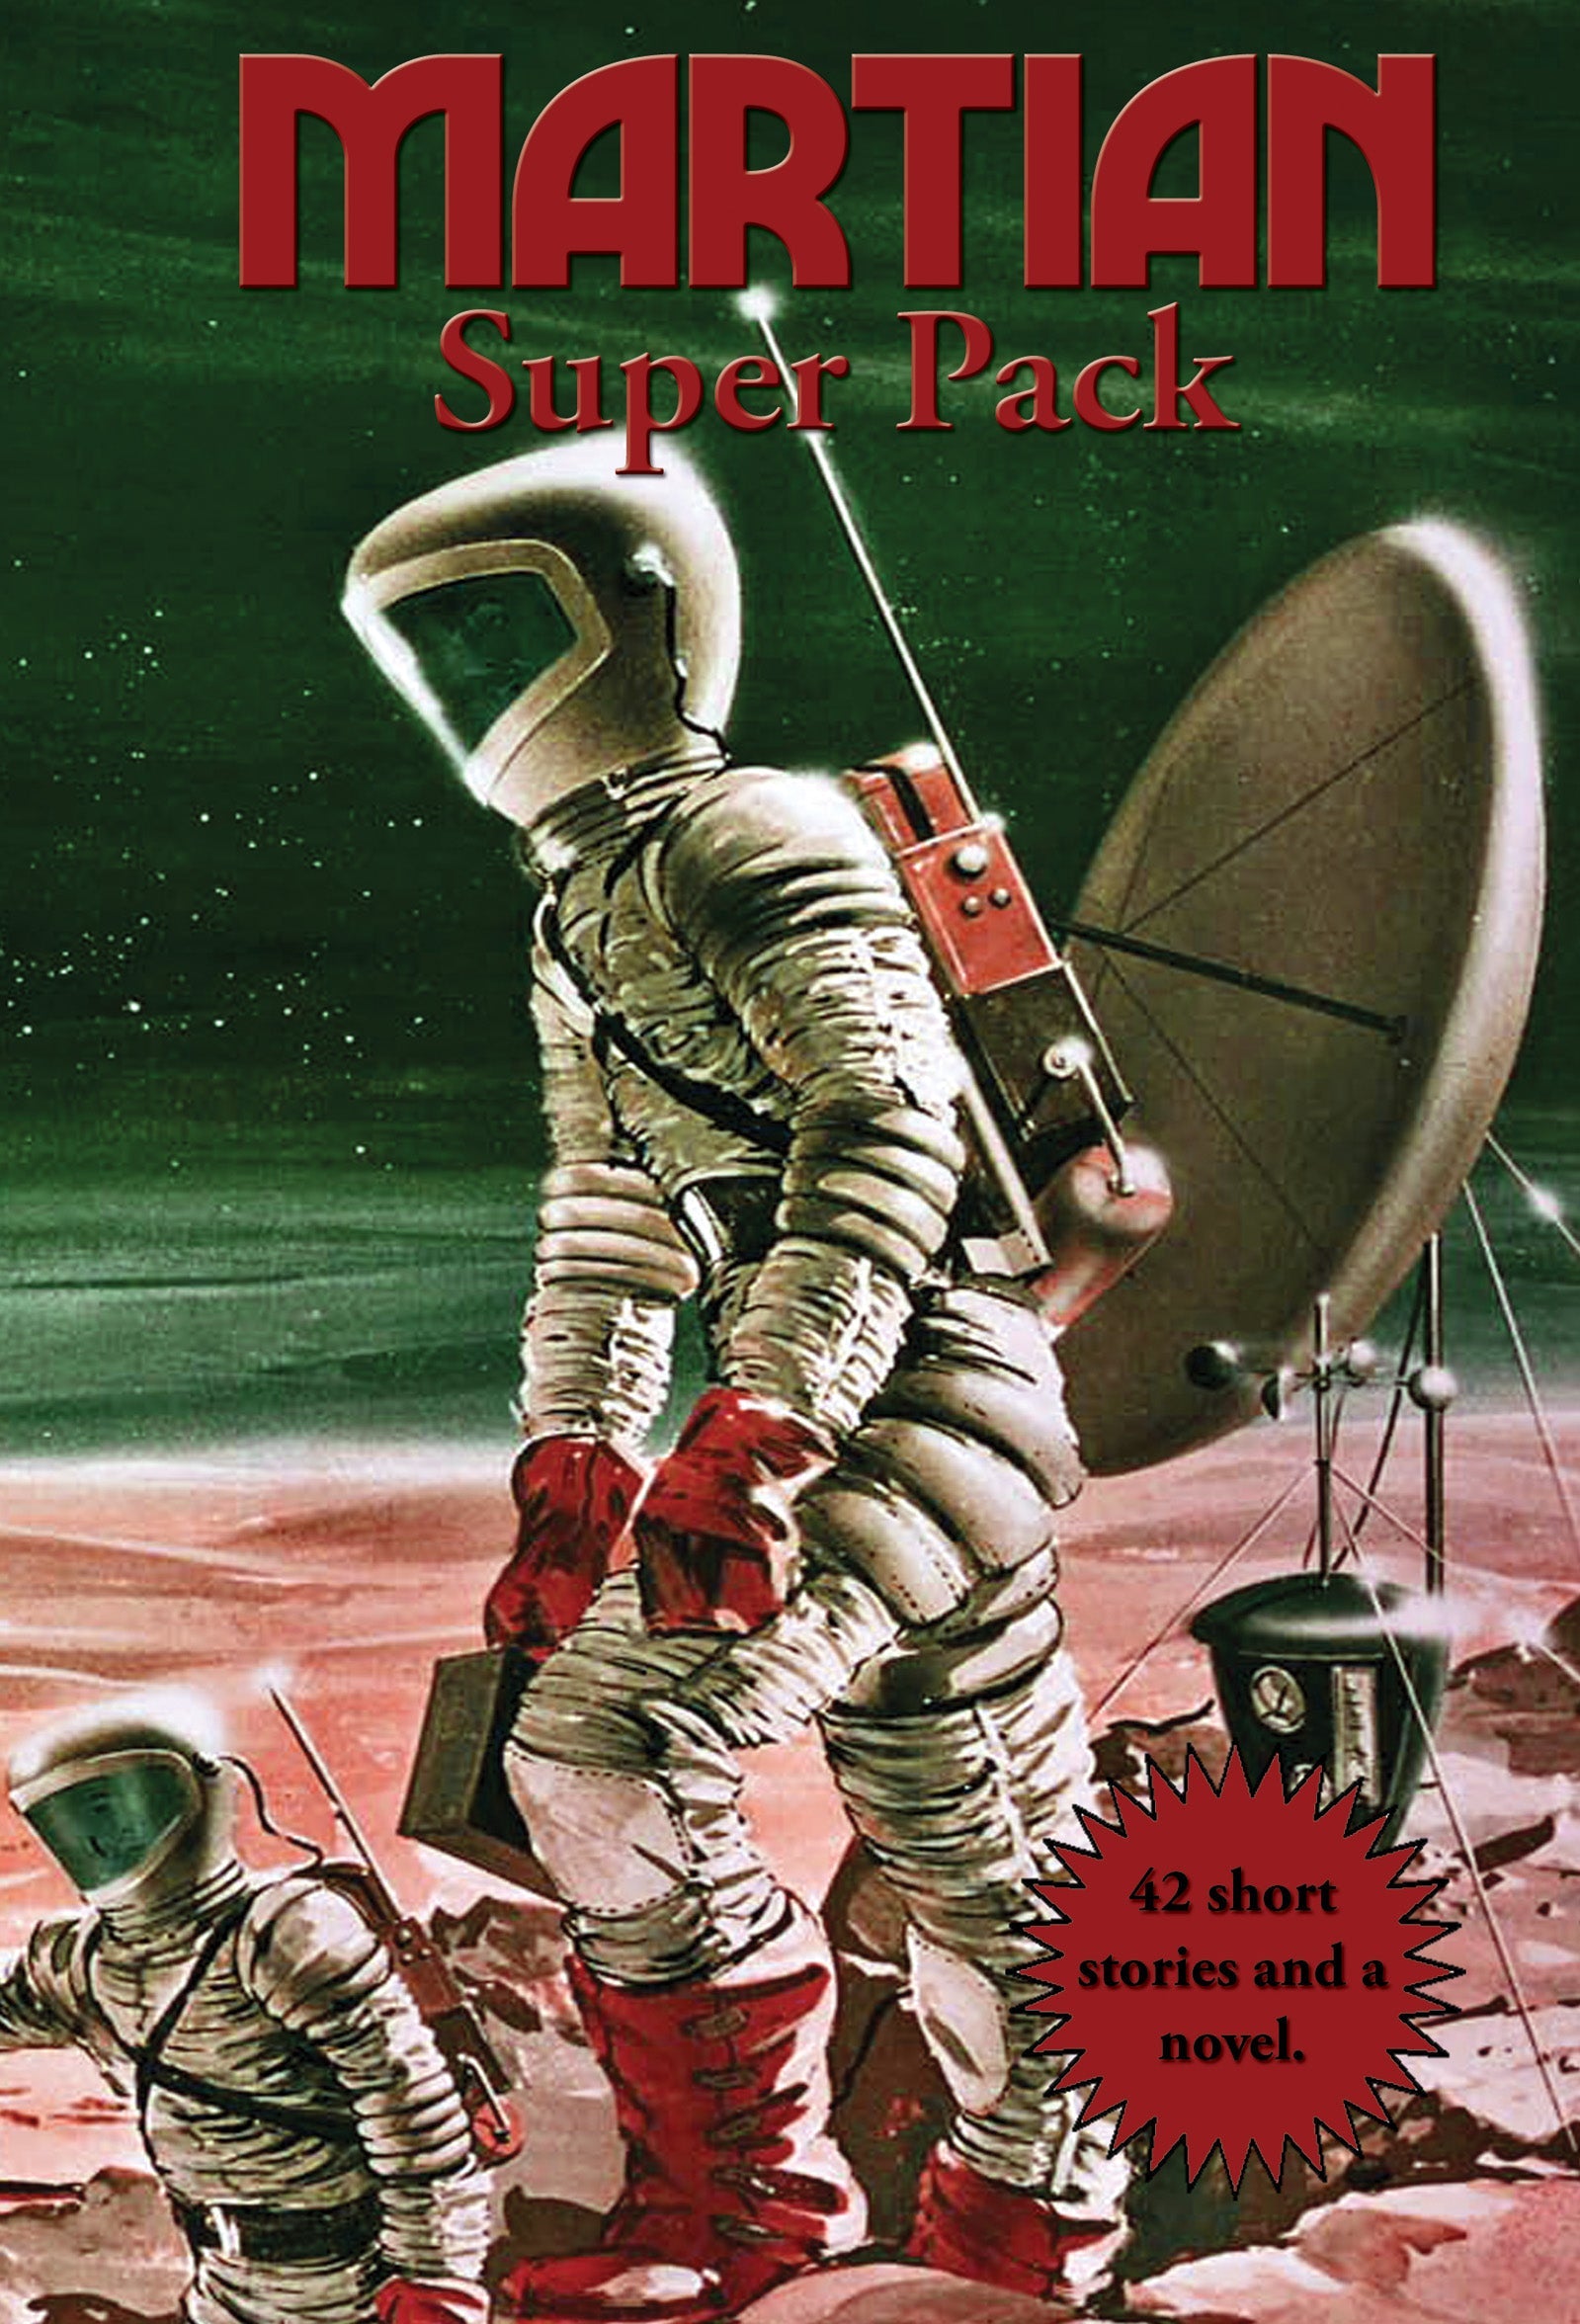 Cover art for Positronic Super Pack #51, the Martian Super Pack.